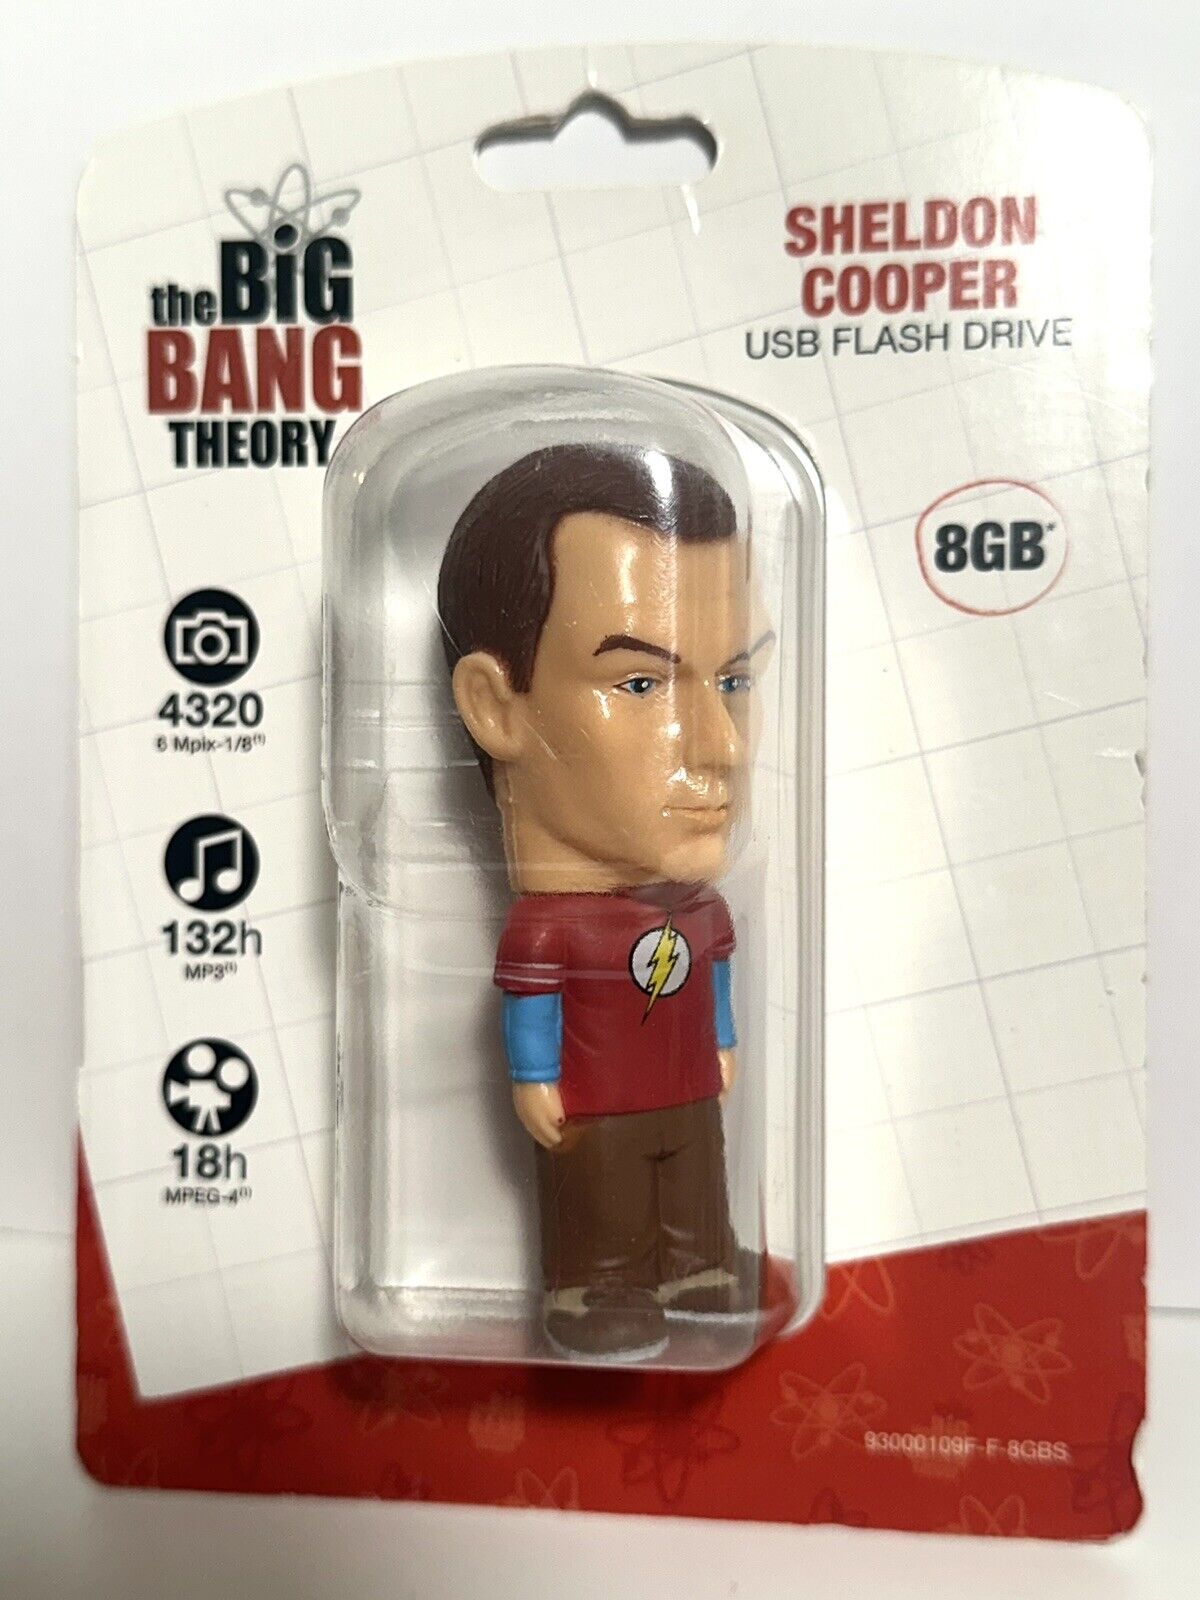 The Big Bang Theory Warner Bros Sheldon Cooper USB Flash Drive 8GB Funko